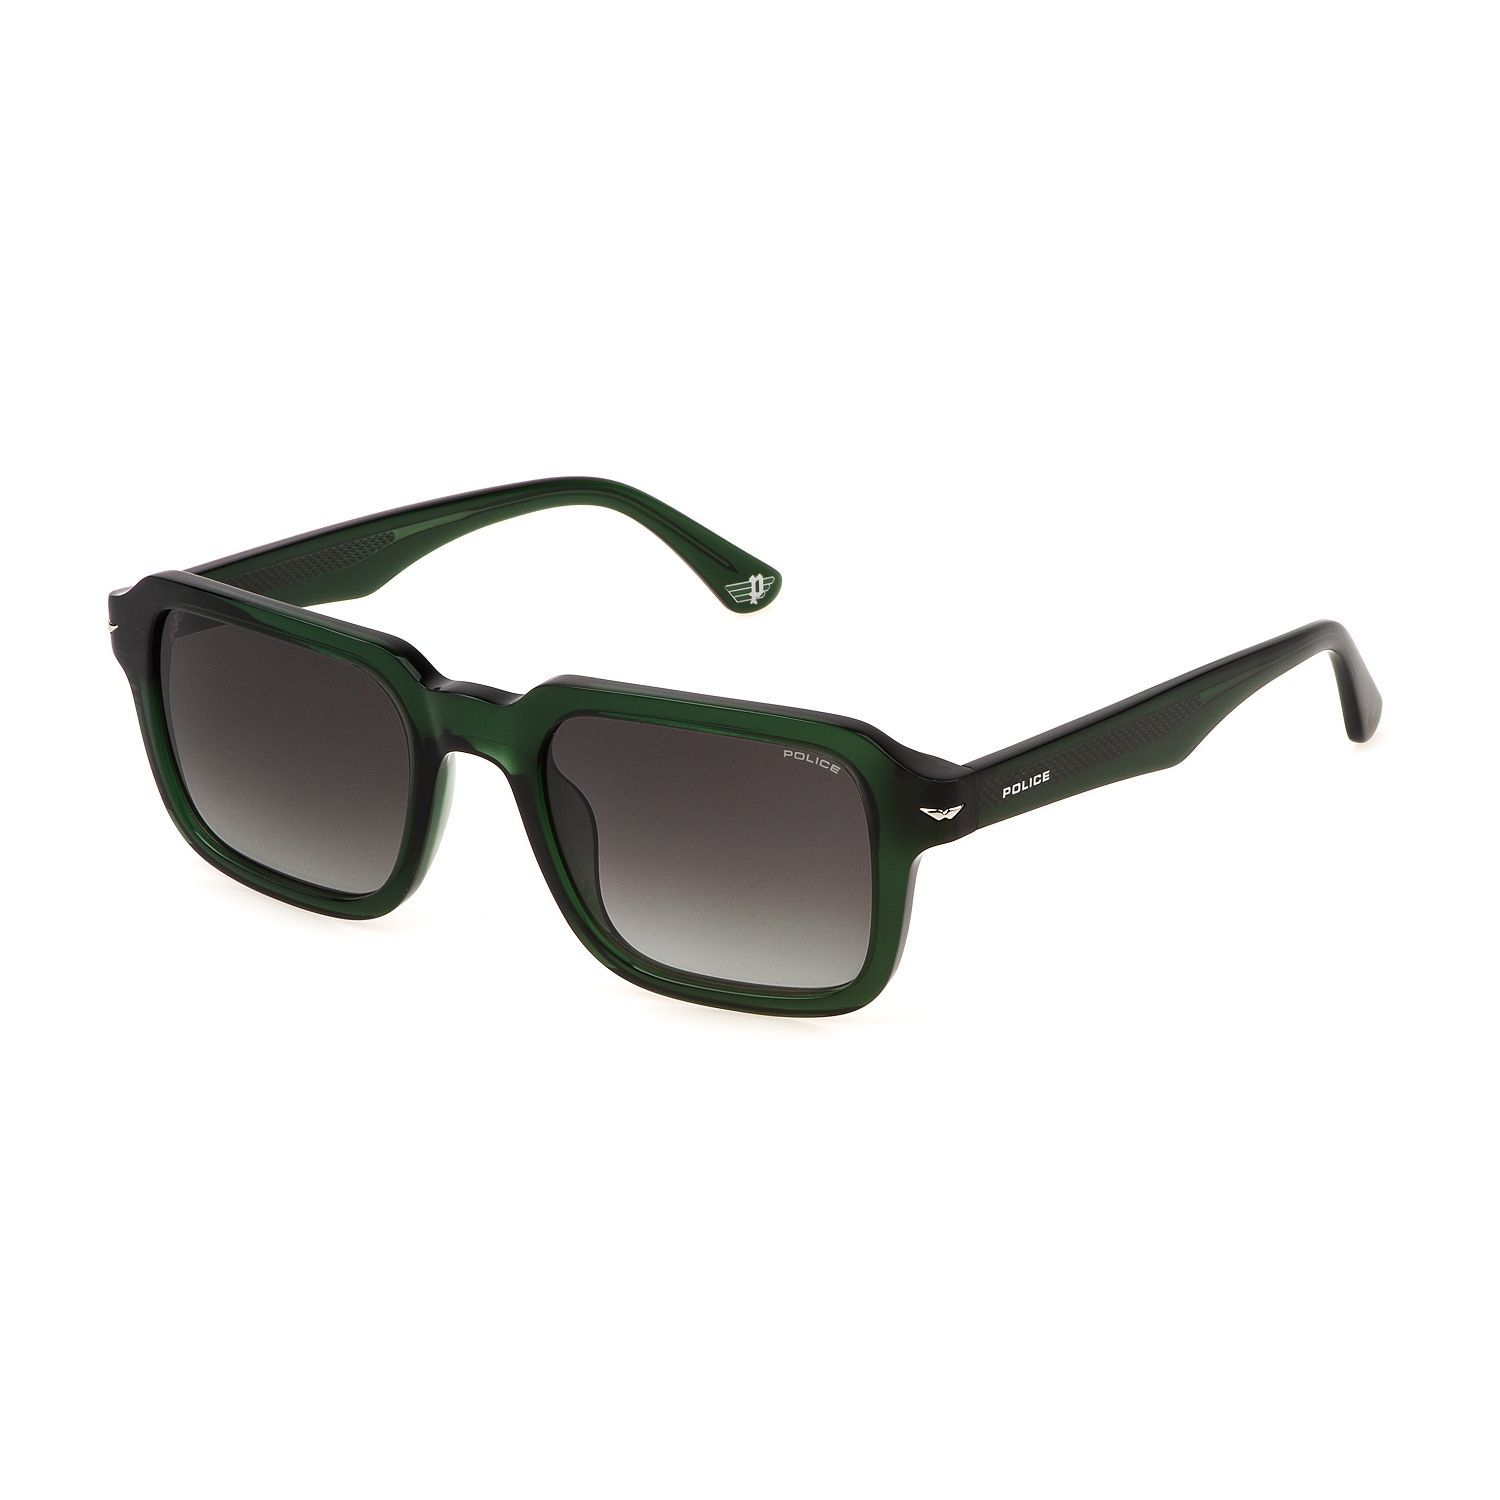 SPLN36M Square Sunglasses 0G61 - size 52